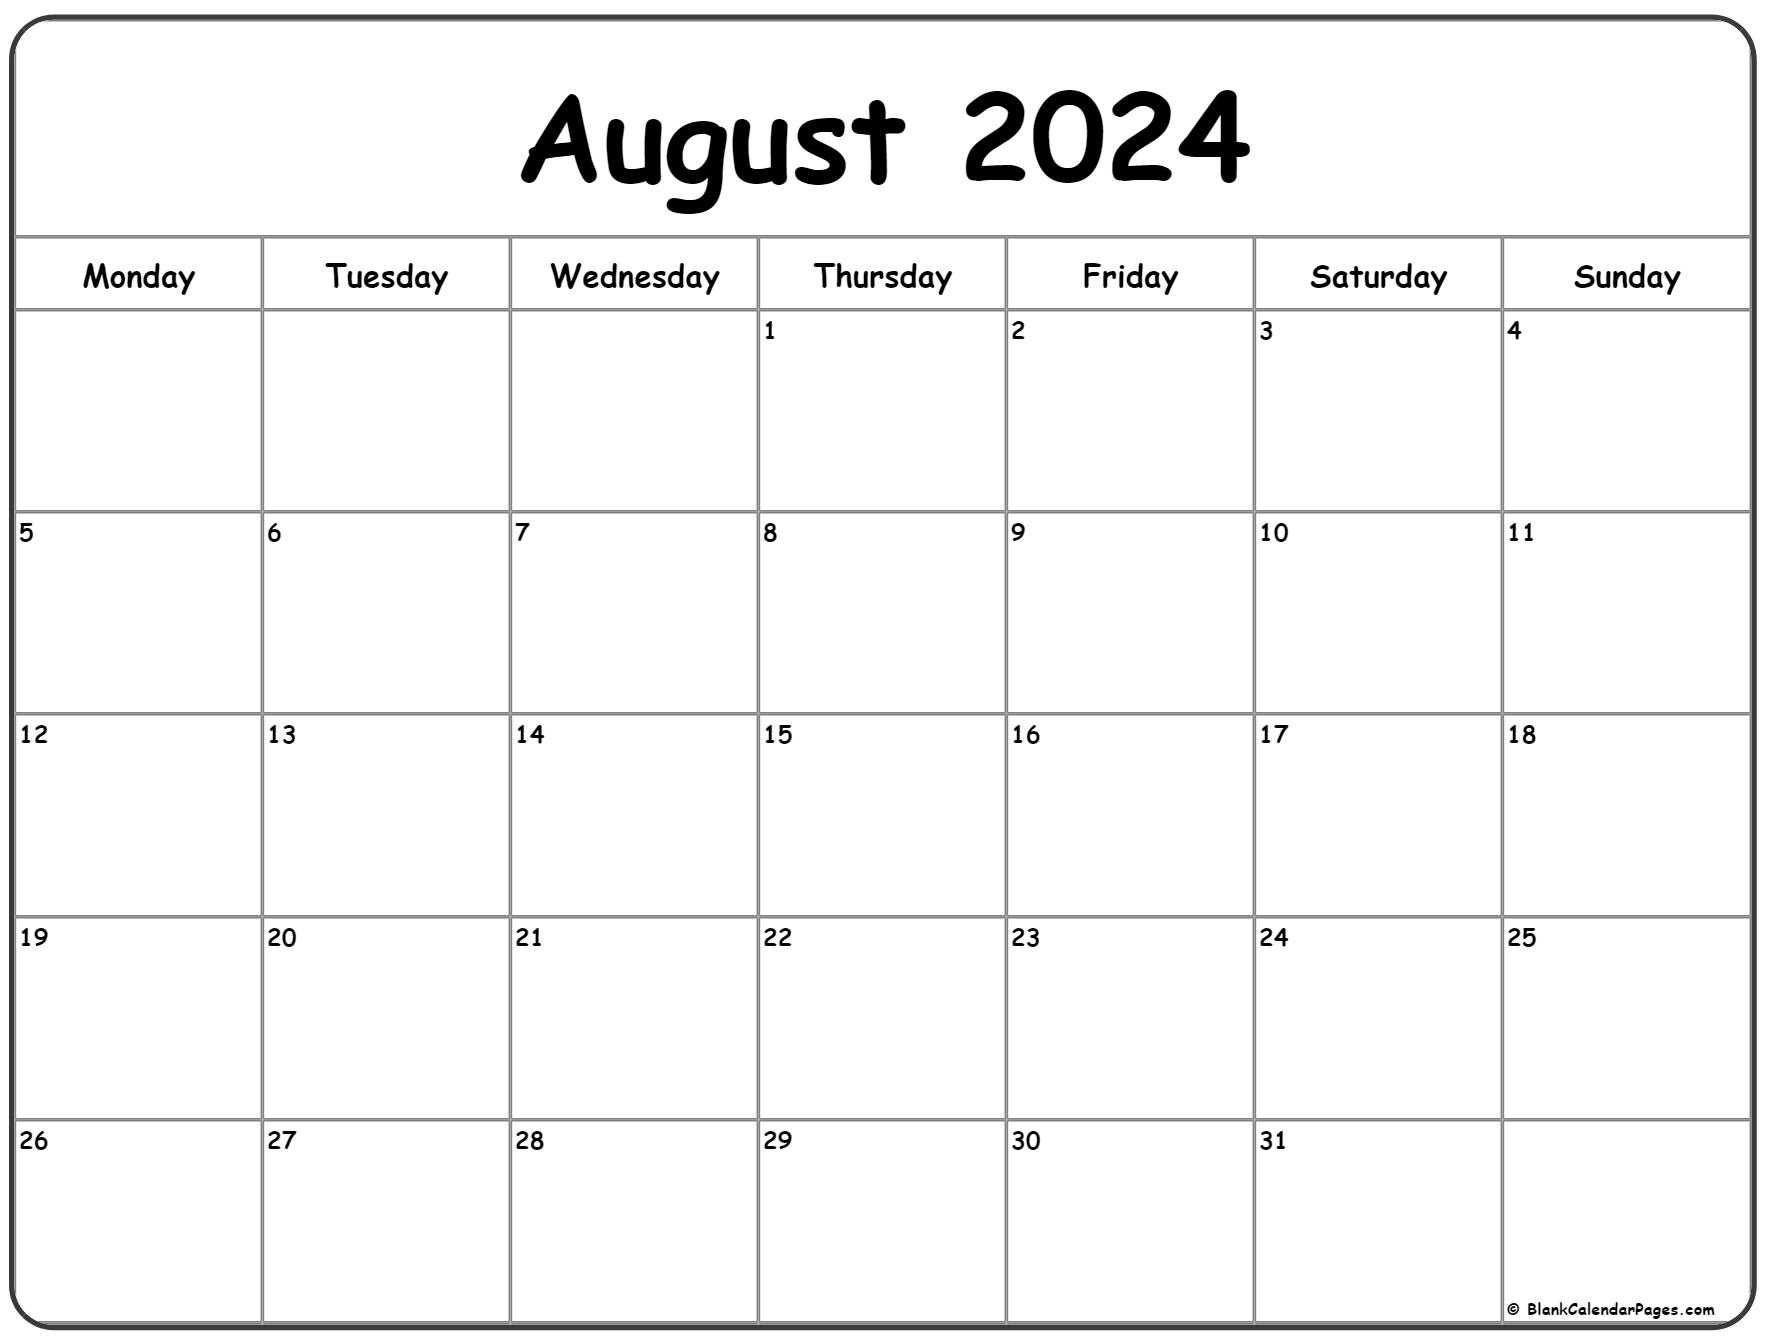 August 2024 Monday Calendar | Monday To Sunday for Calendar August 2024 Printable